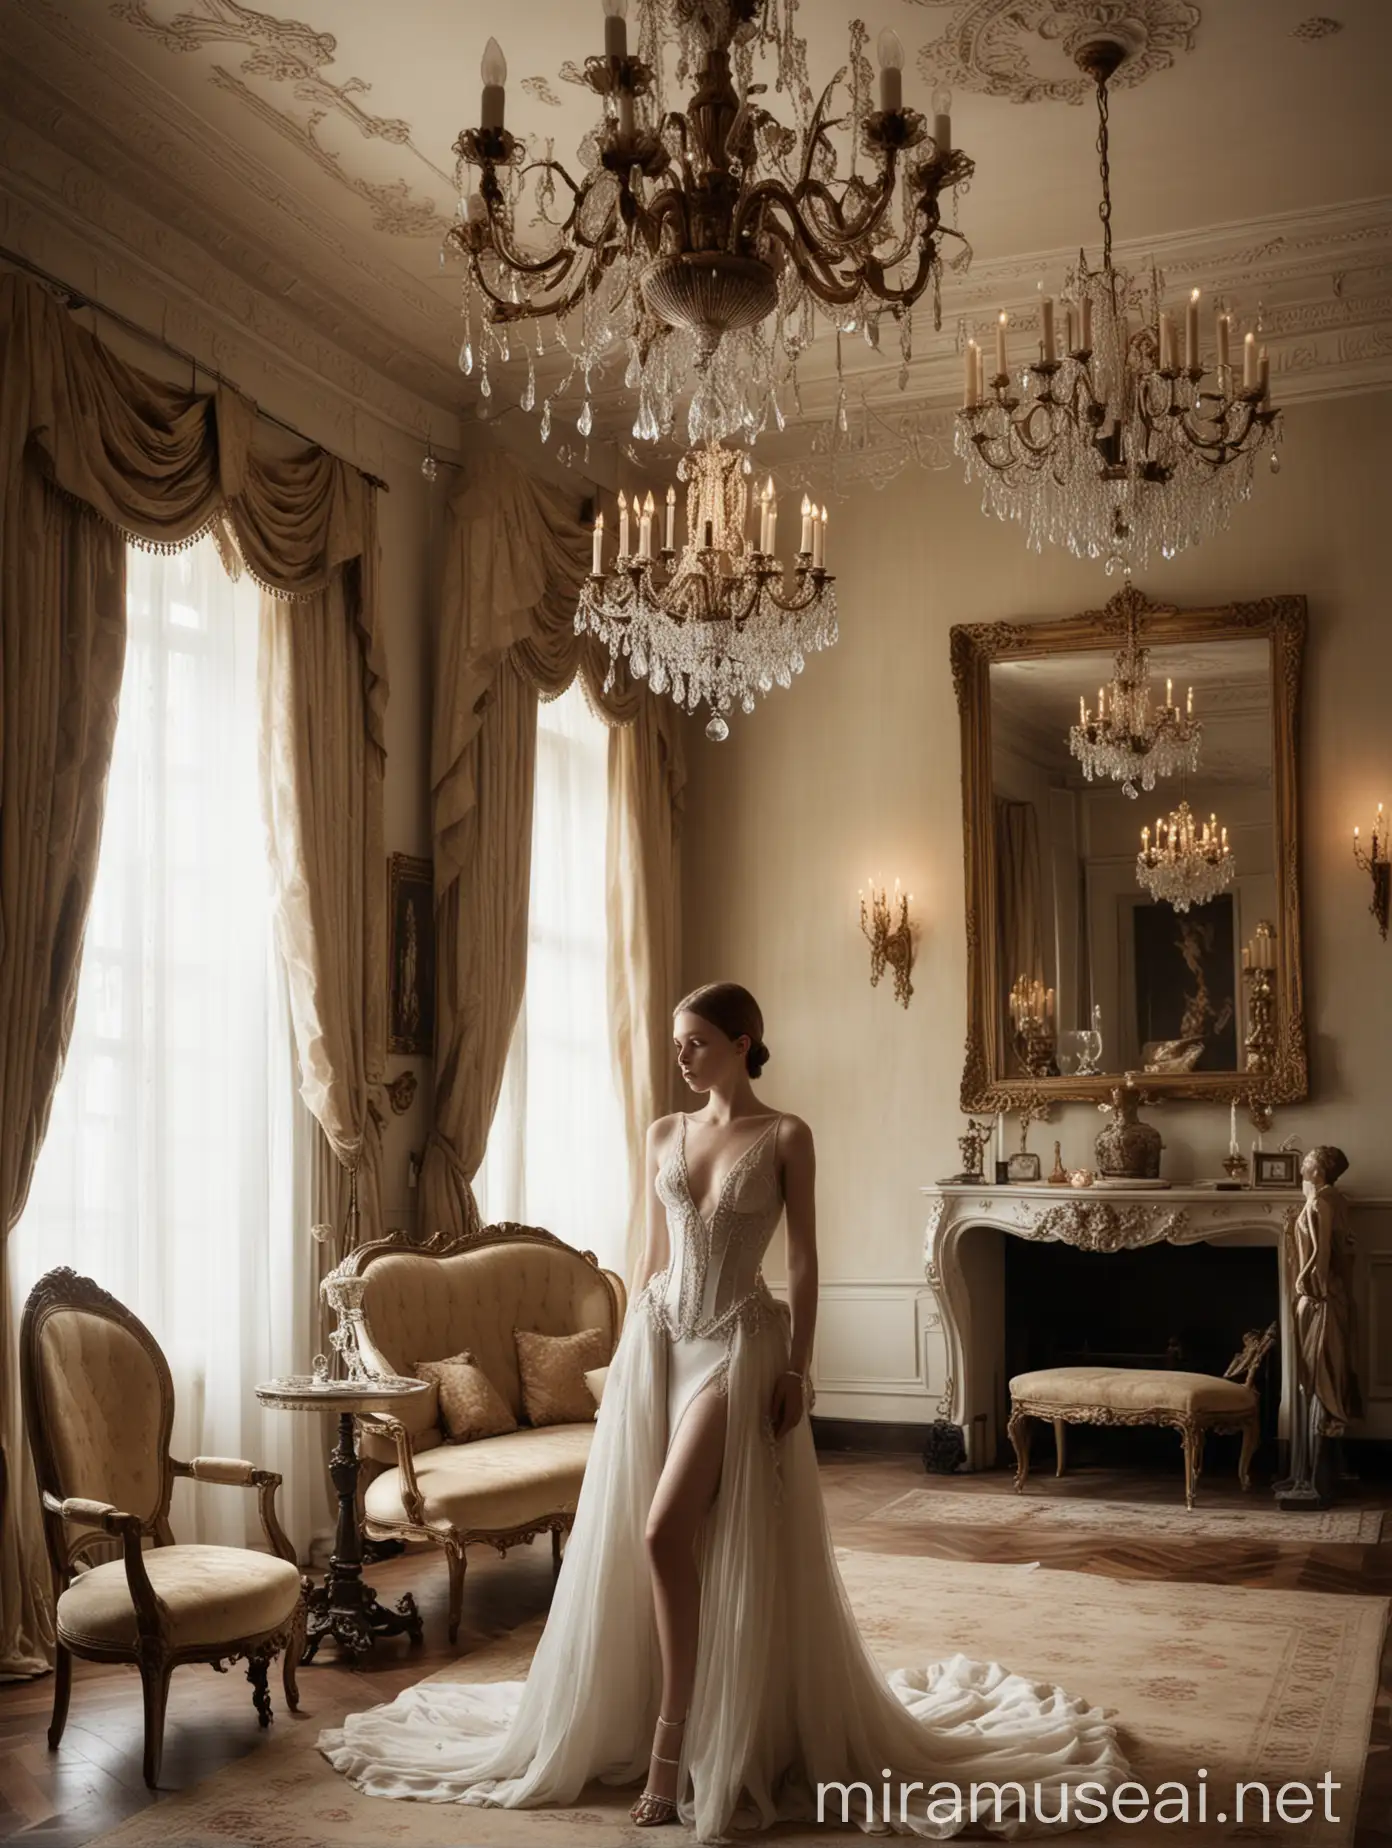 androgynous woman in alexander mcqueen low-cut dress, beautiful interior chandelier, luis icart inspiration 